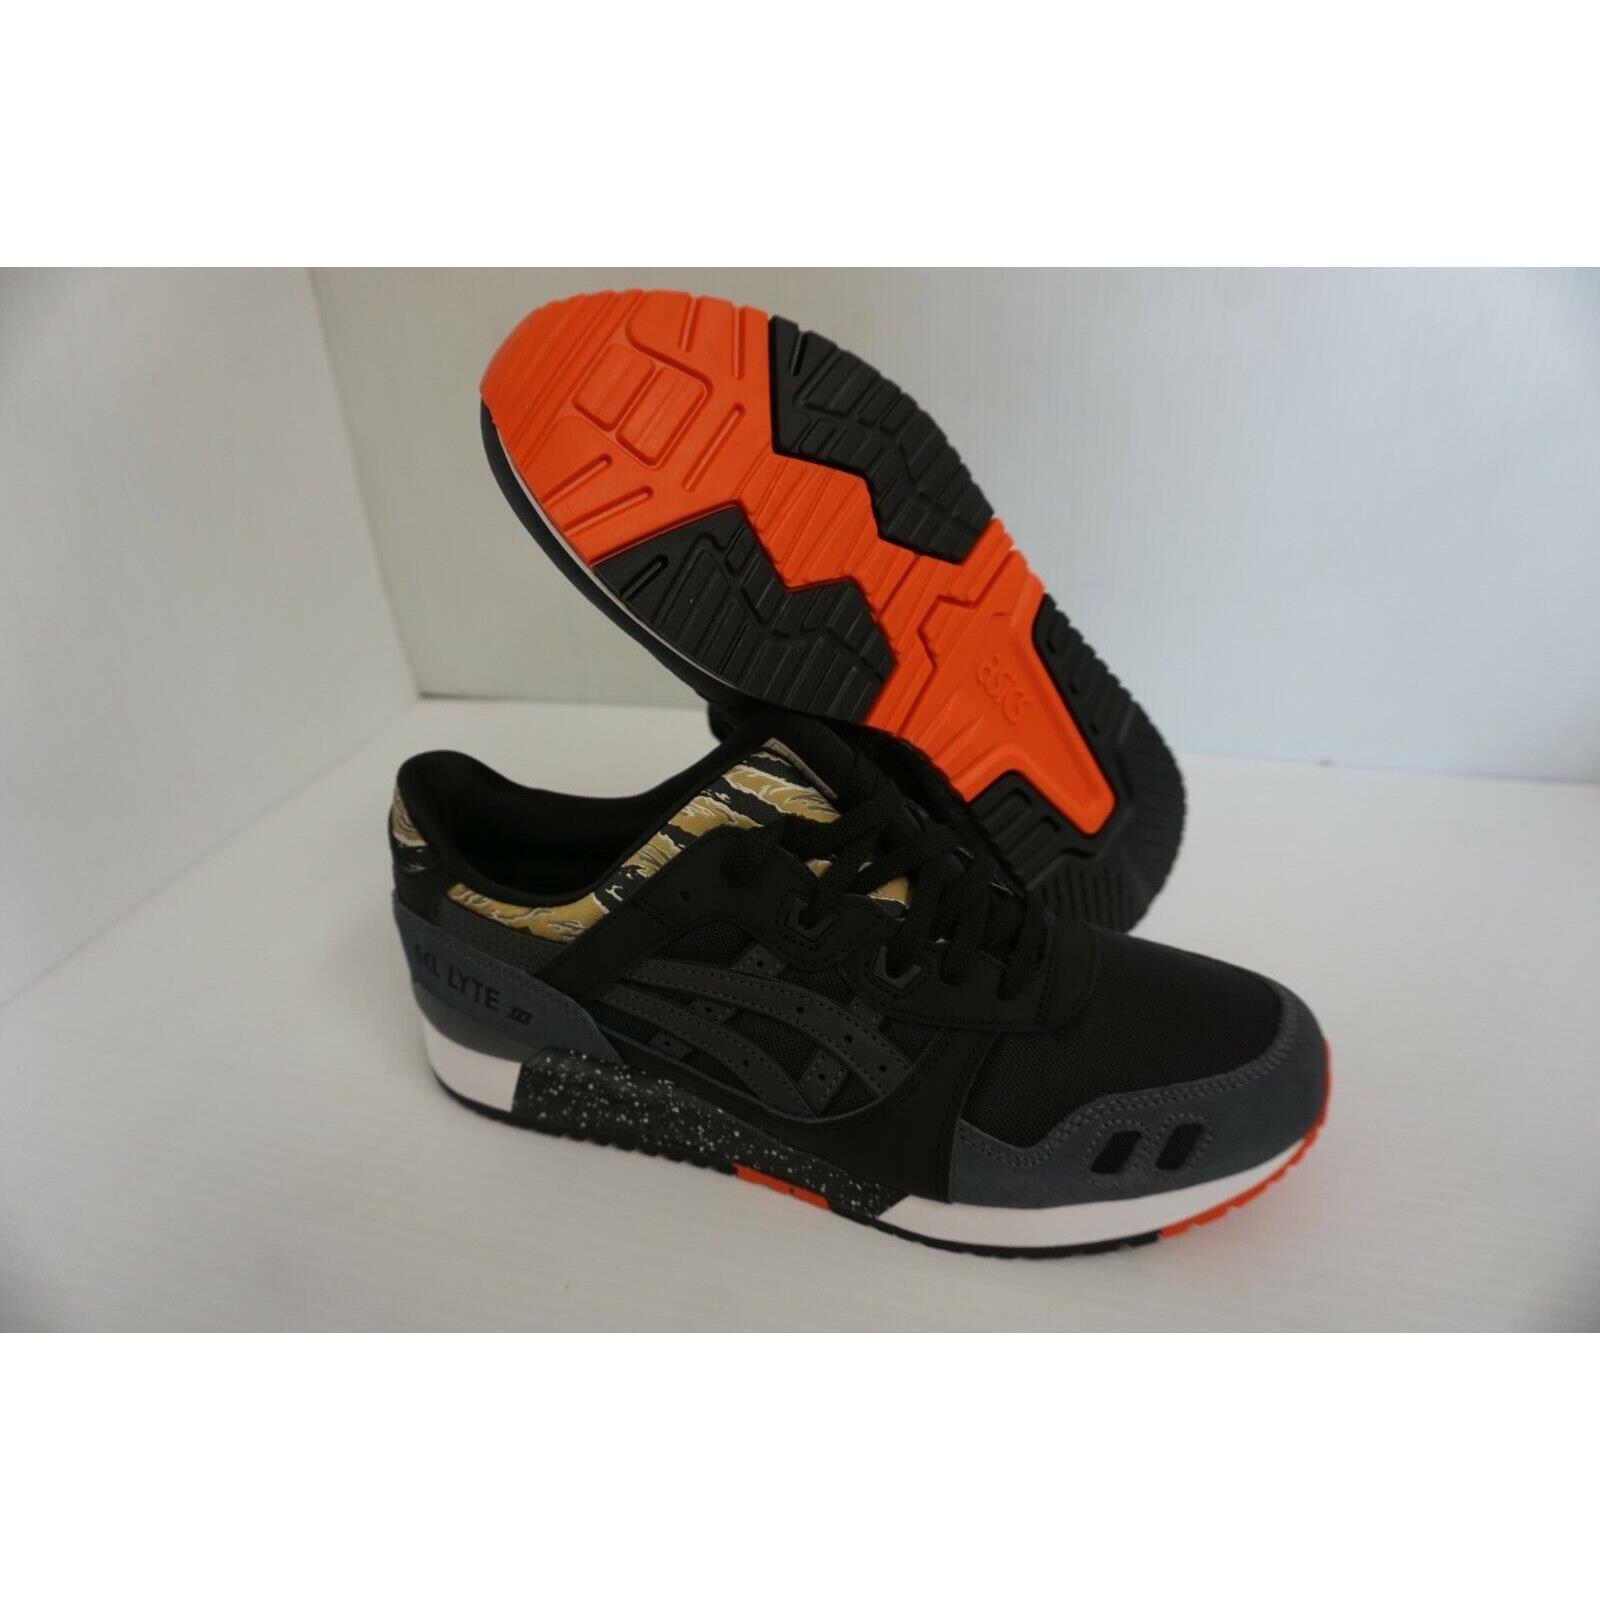 Asics Mens Gel Lyte Iii Running Shoes Tiger Black Orange Size 11.5 us